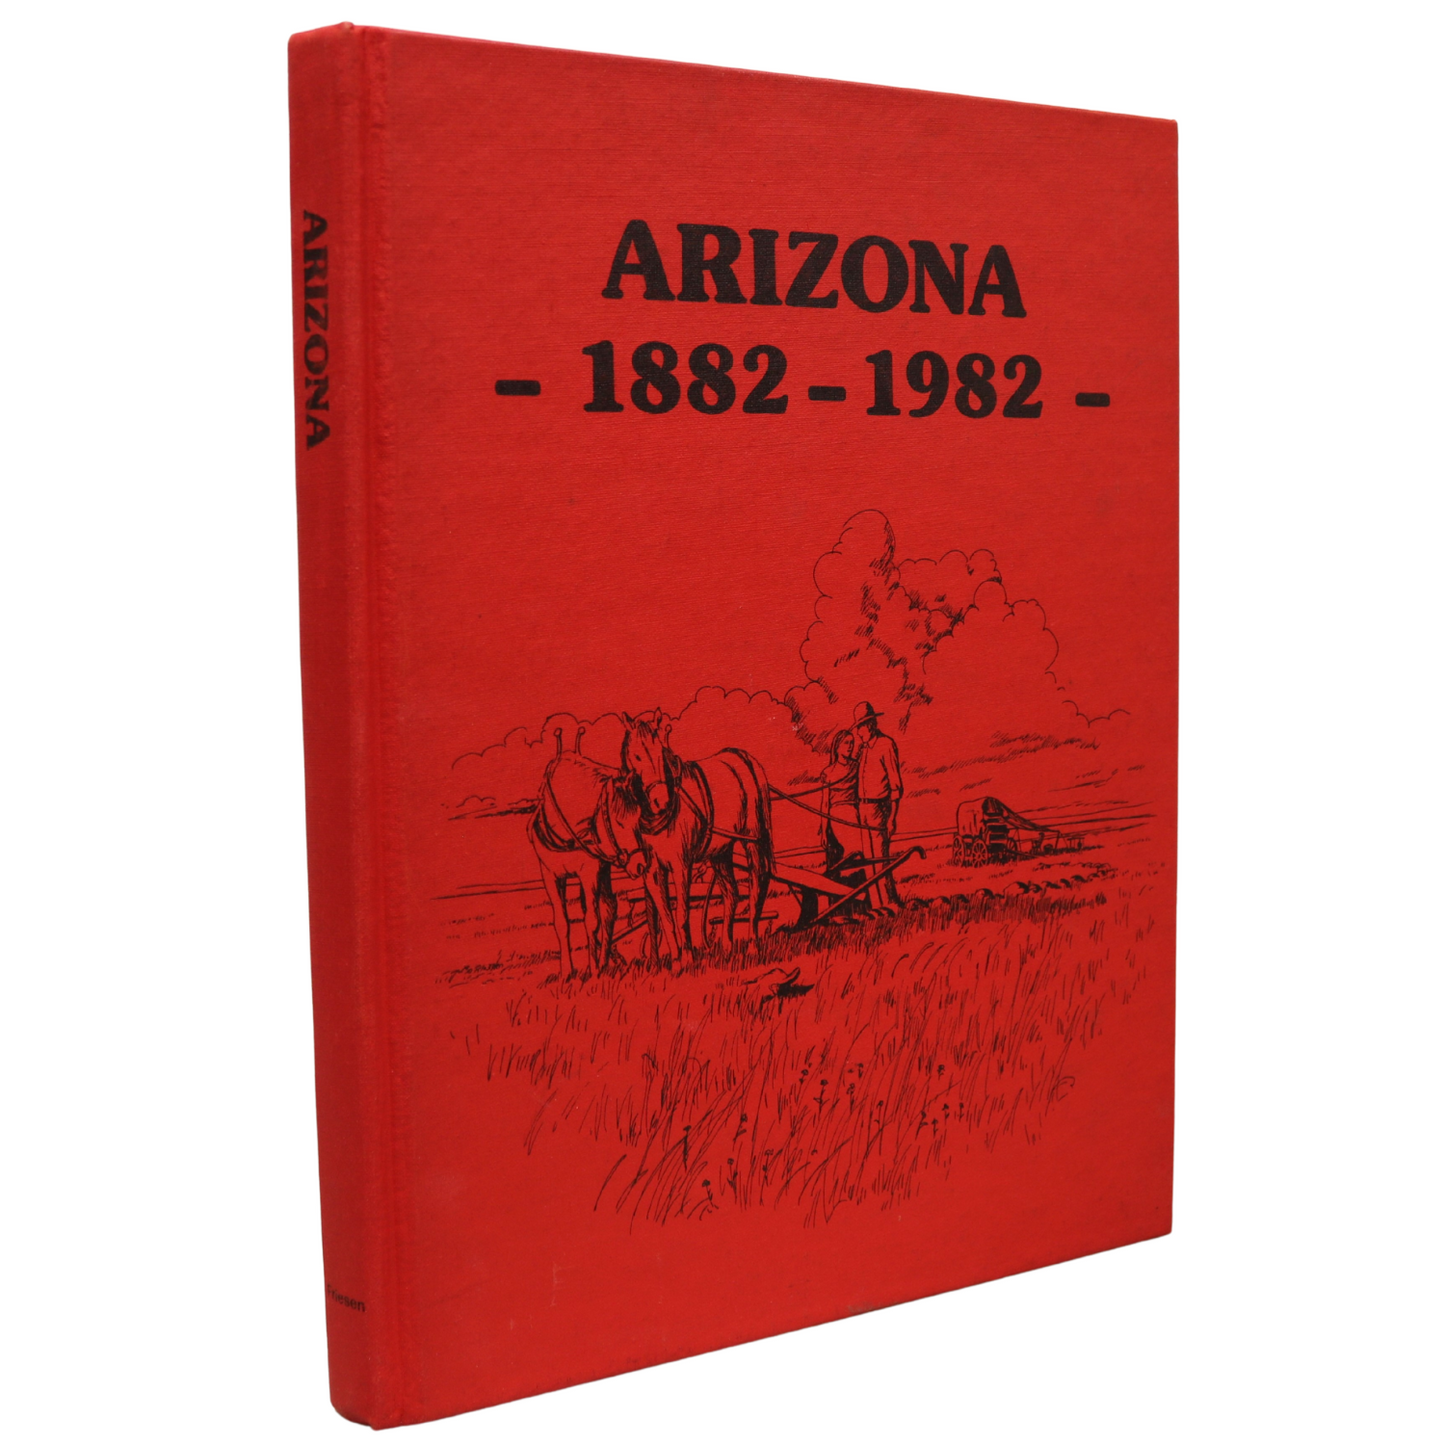 Arizona 1882-1982 Manitoba Canada Canadian Local History Used Book